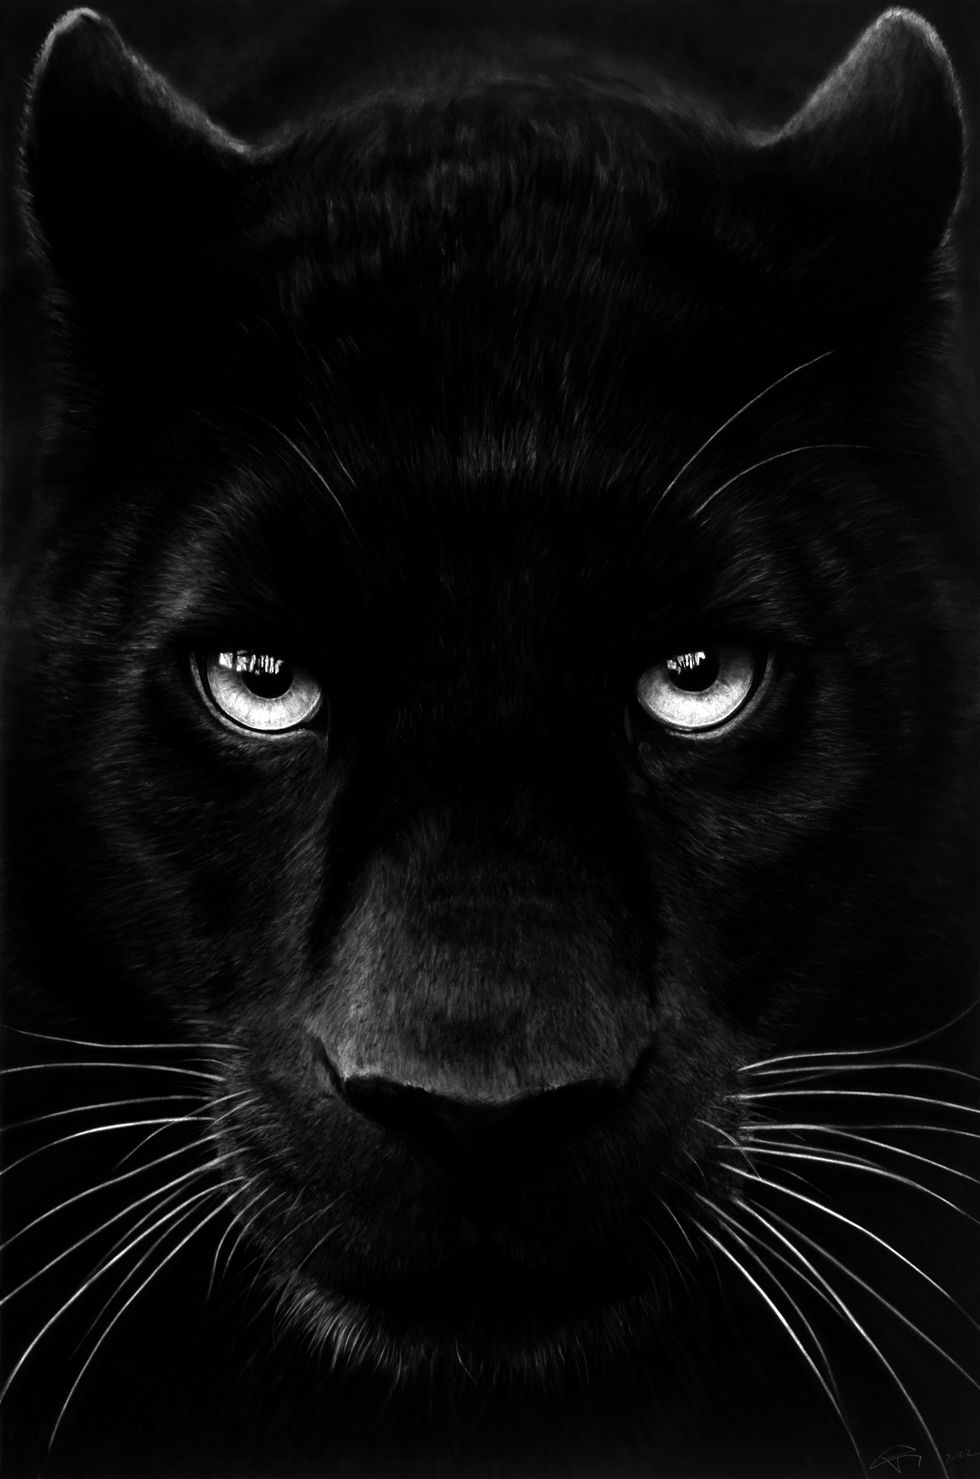 robert longo, untitled black panther working title, 2021, charcoal on mounted paper, 60" × 40" 1524 cm × 1016 cm image dimensions, framed, 65" × 45", 81226, alt rl5683, format of original photography high res tif, source